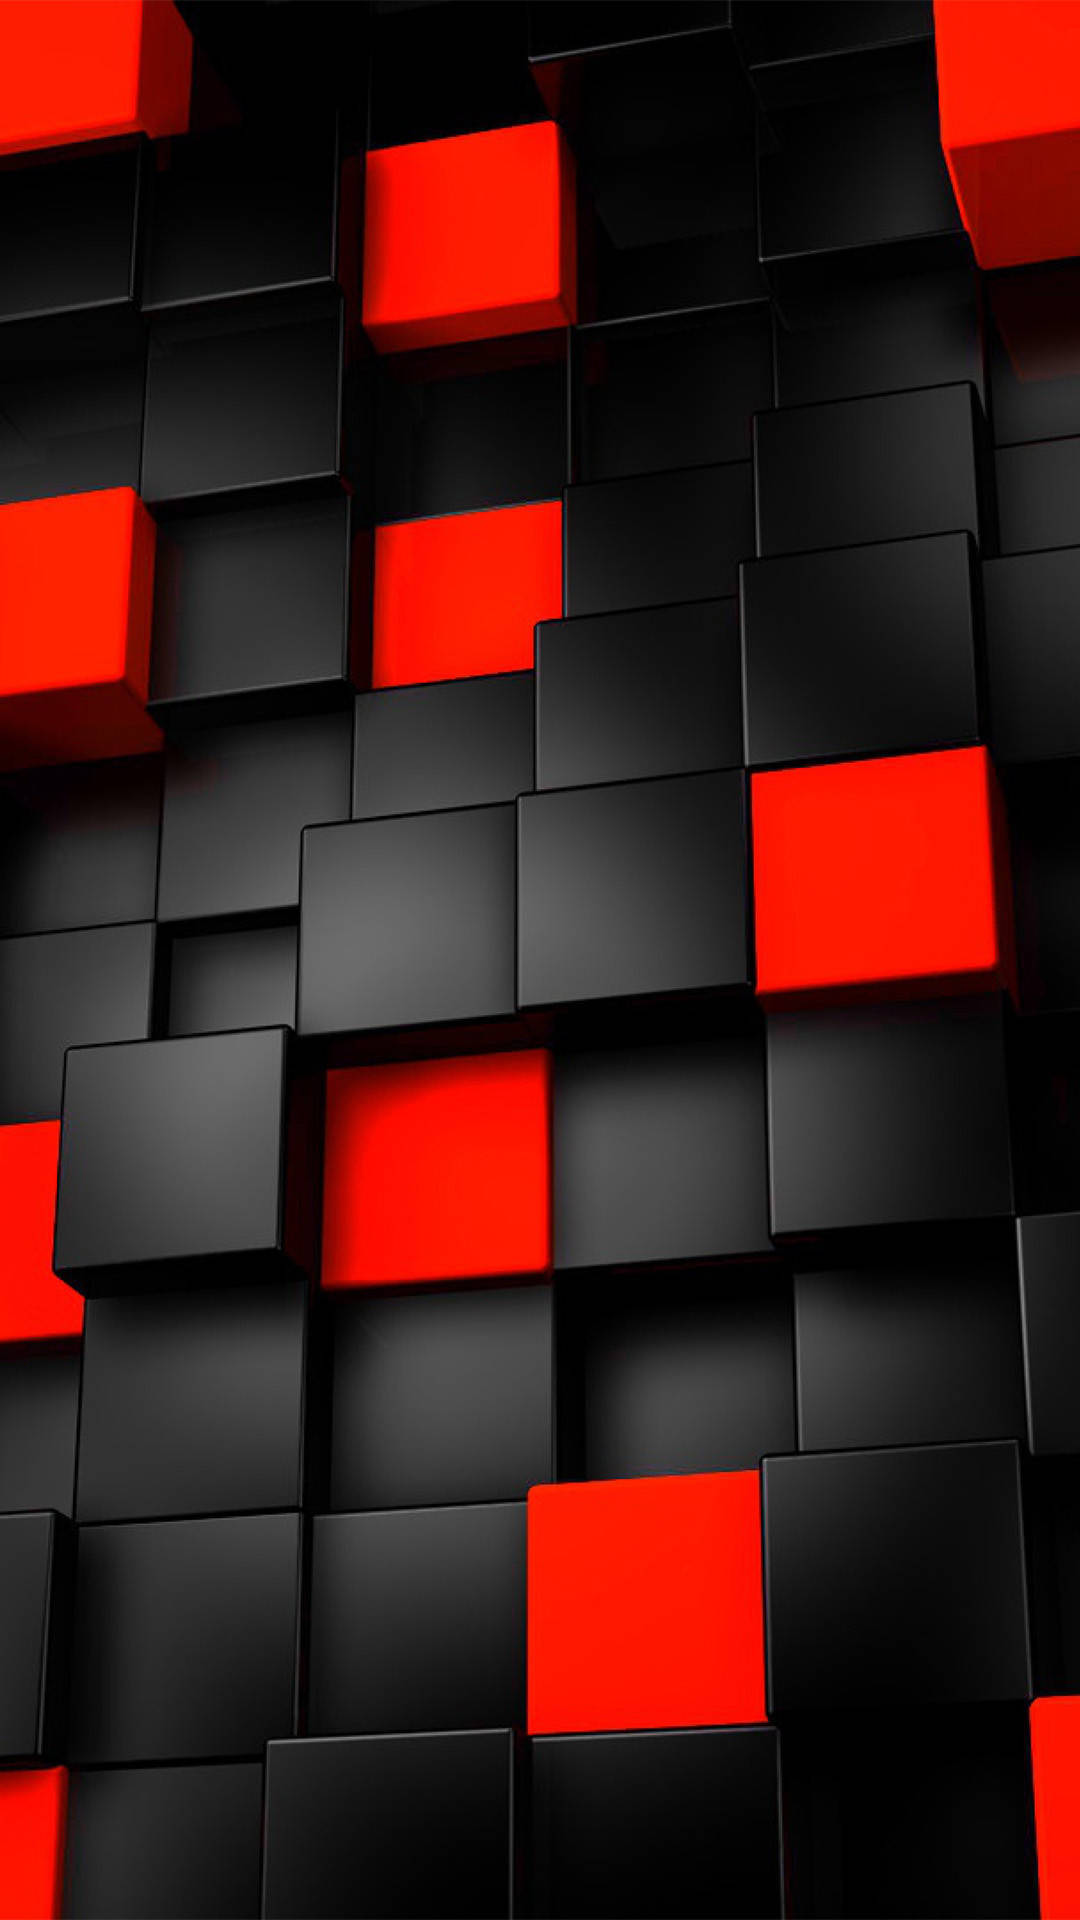 Få den nyeste teknologi med dette stilfulde rød og sorte iPhone! Wallpaper